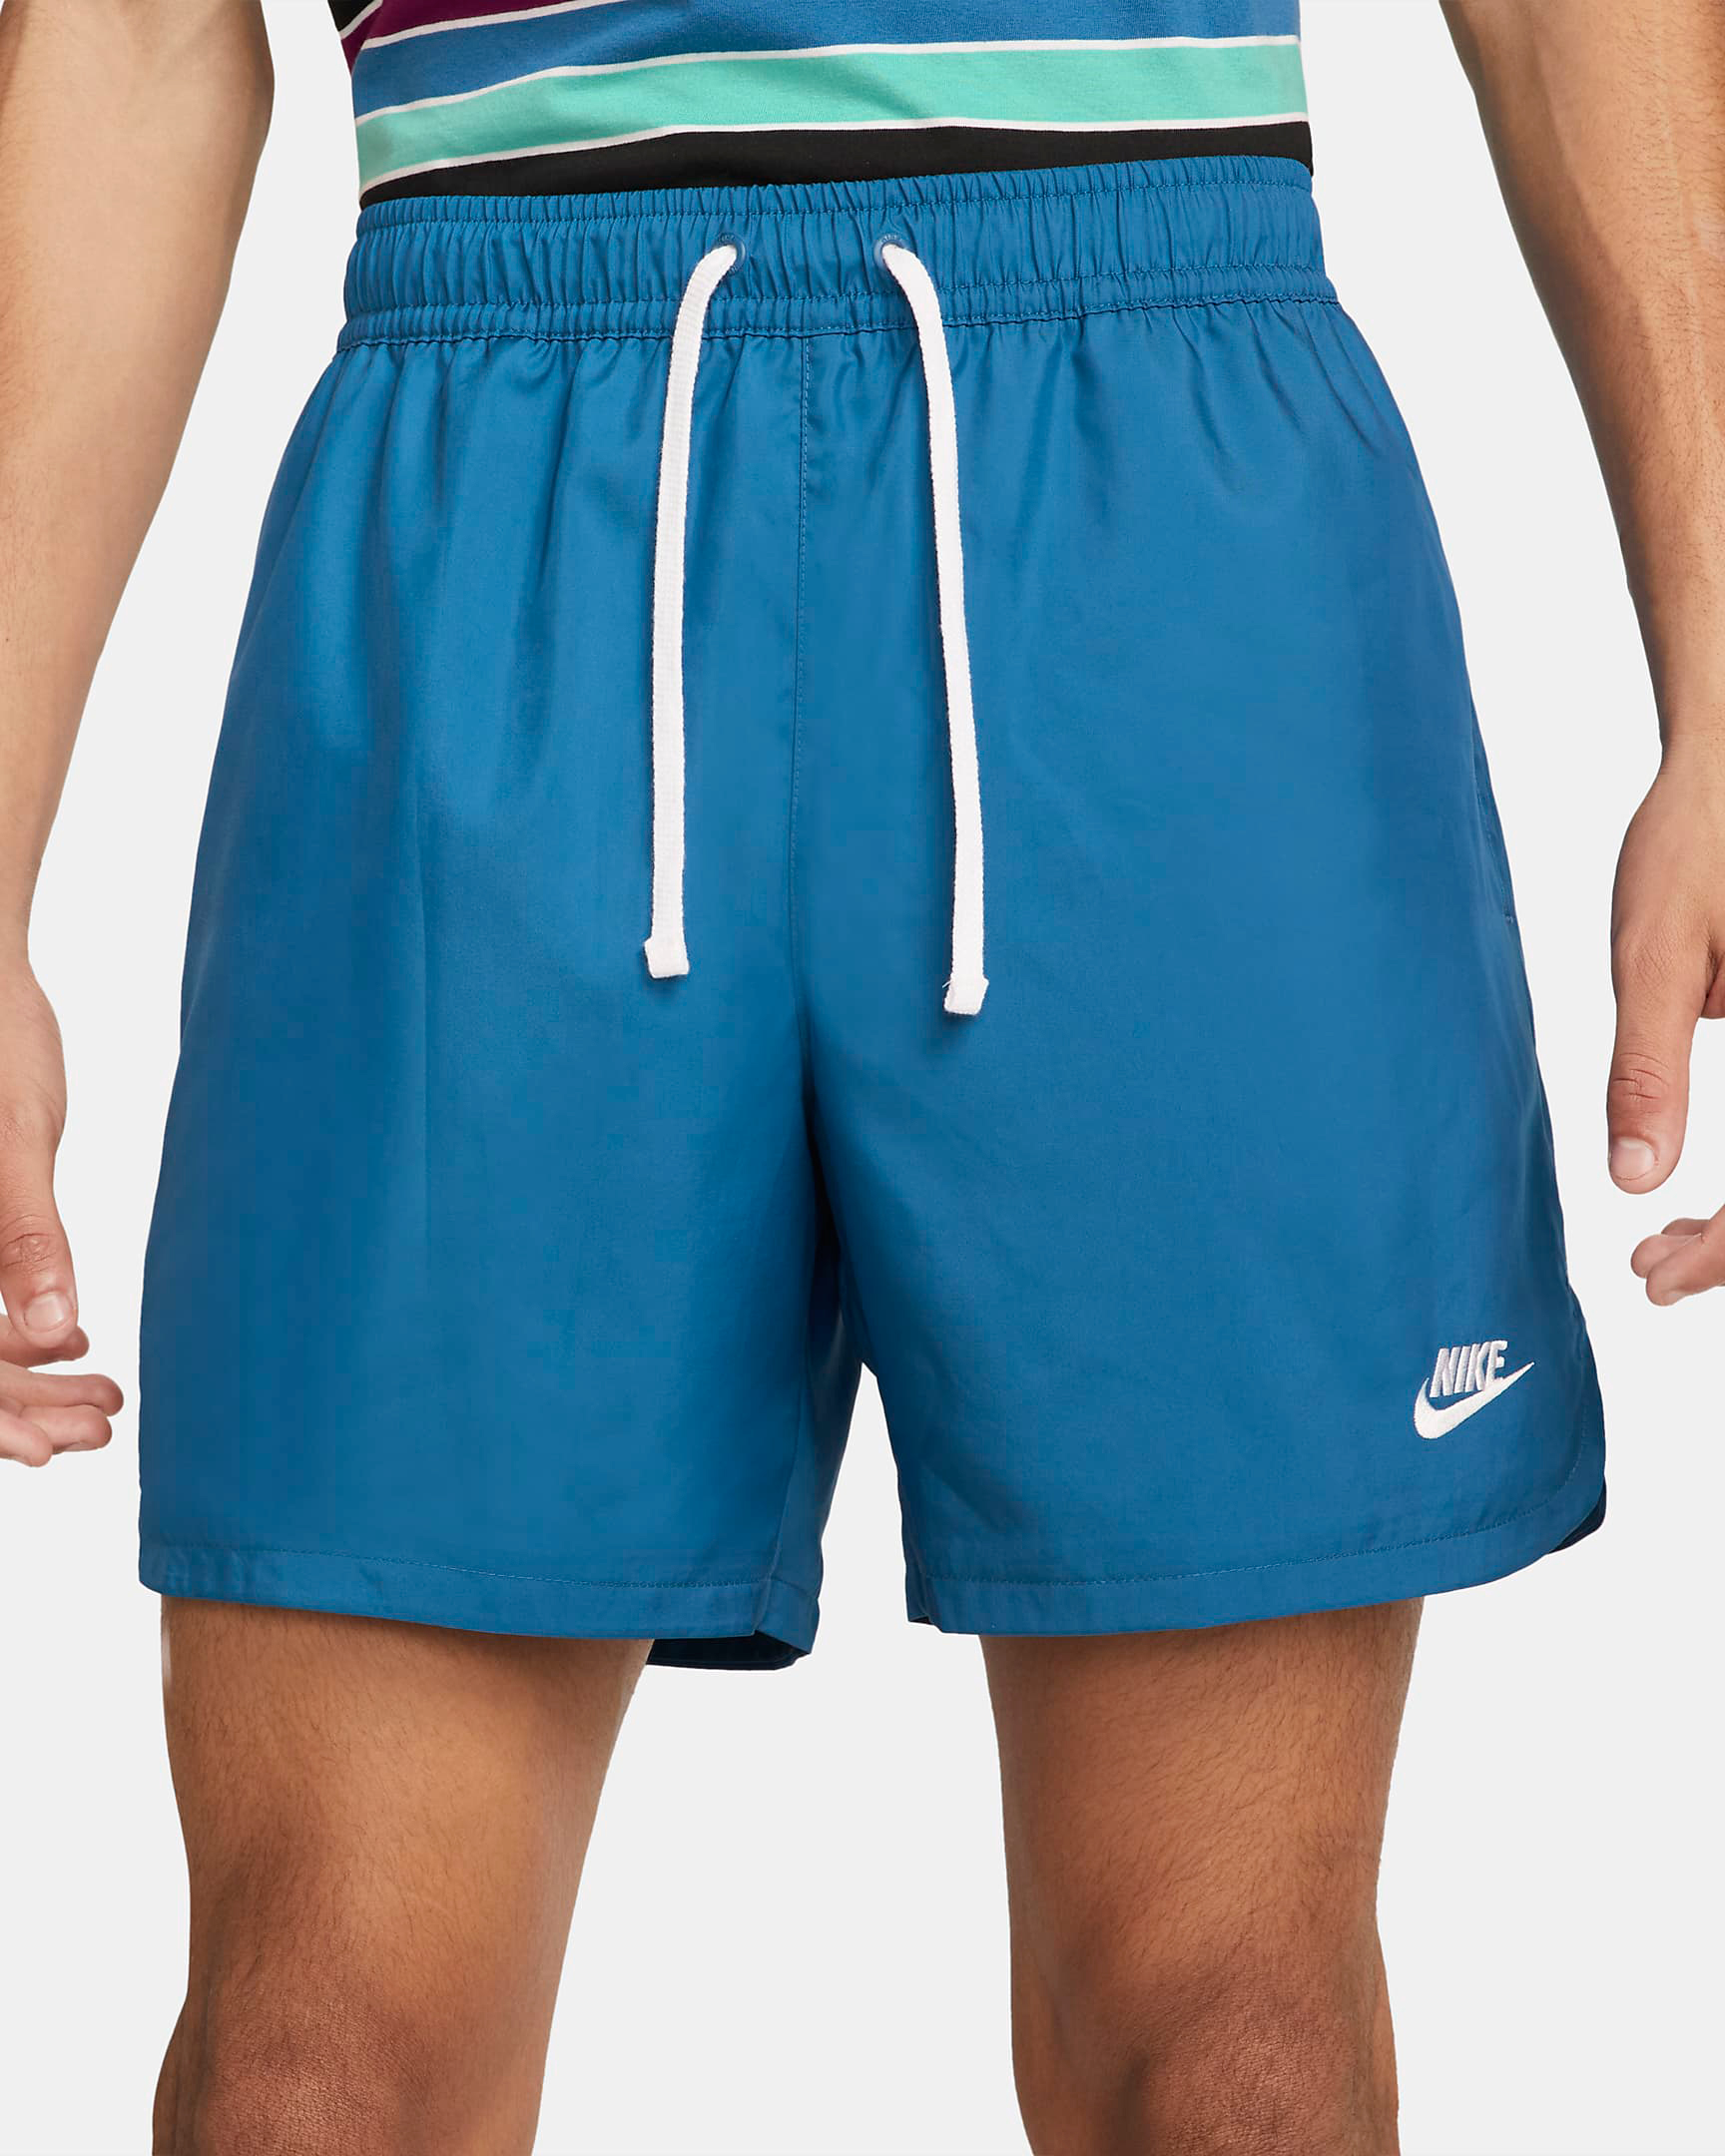 nike-woven-flow-shorts-dark-marina-blue-1